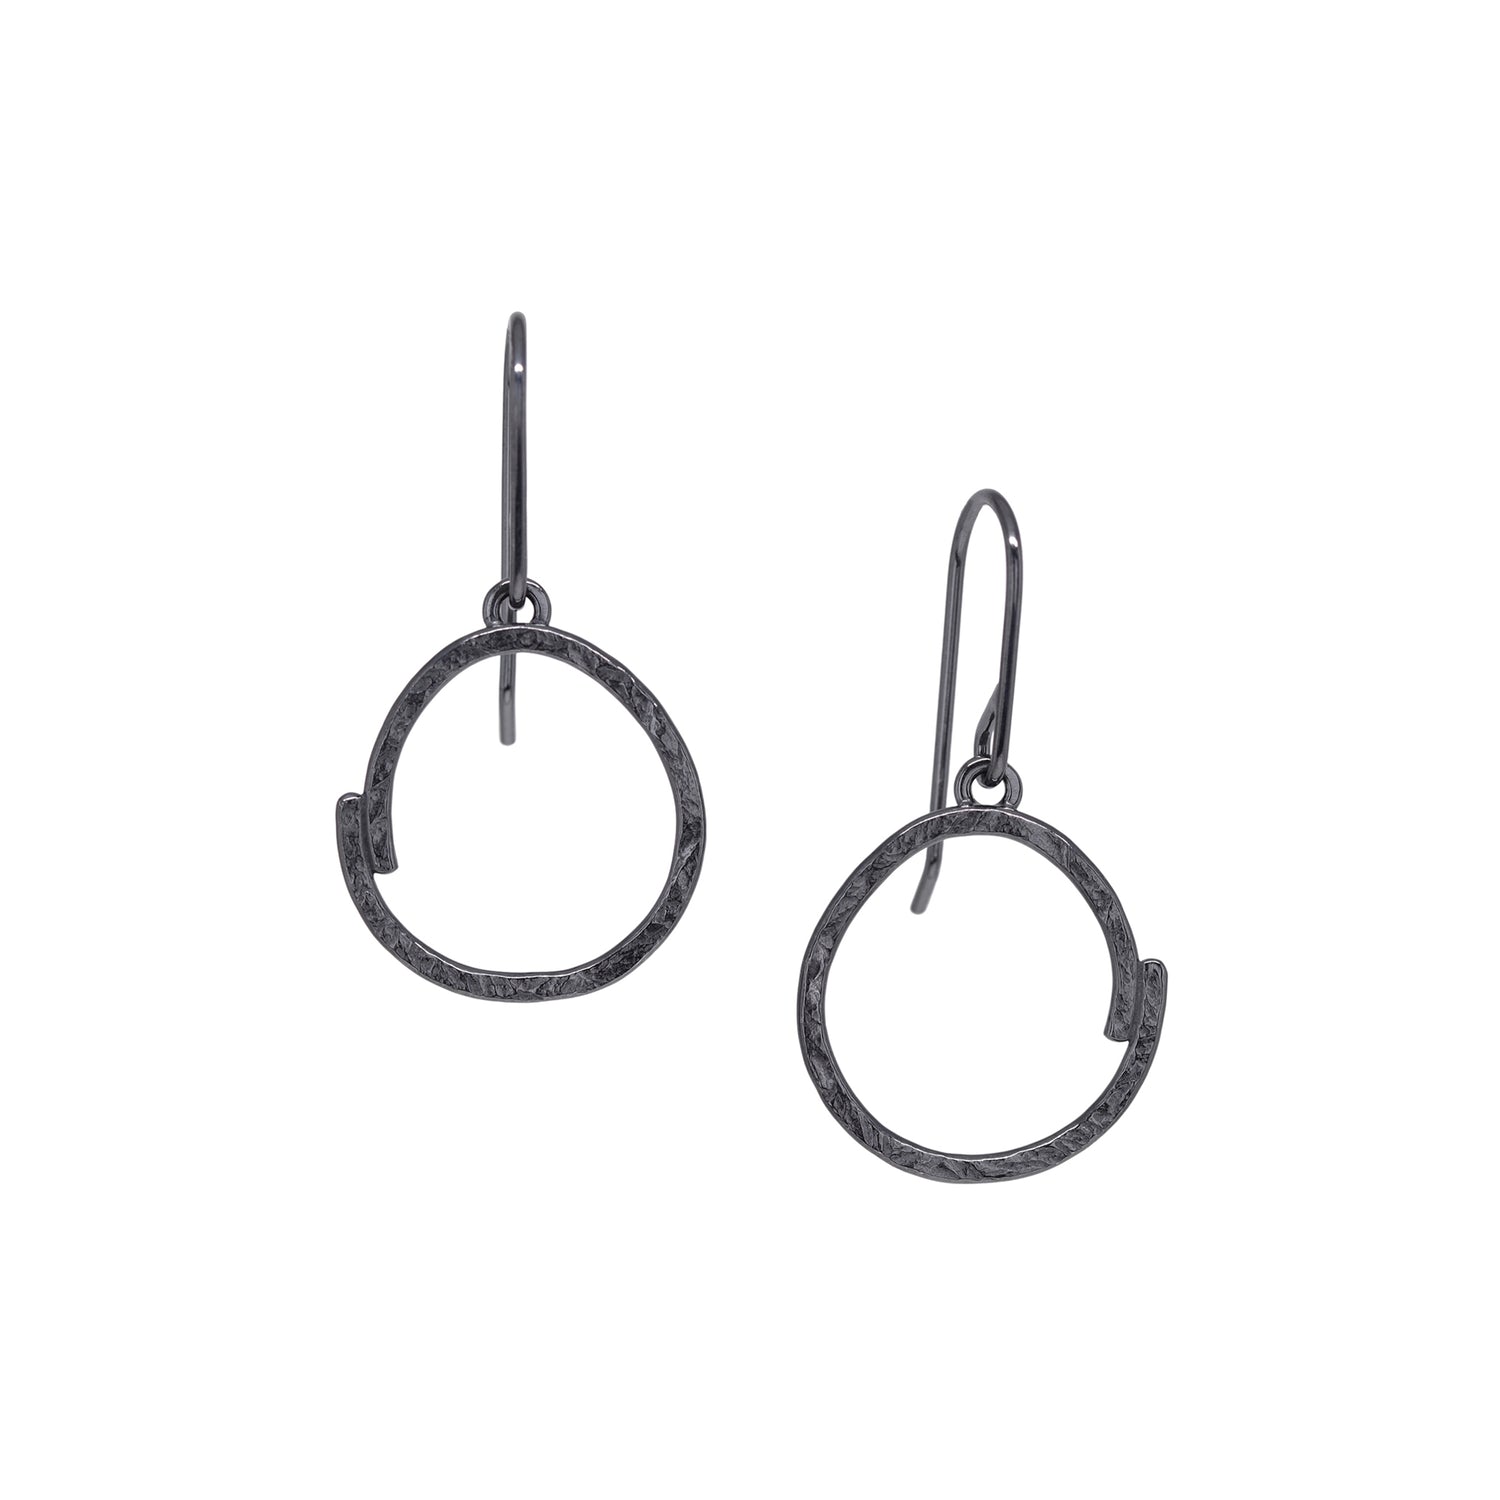 Sketch Earrings - Small - Dark Sterling